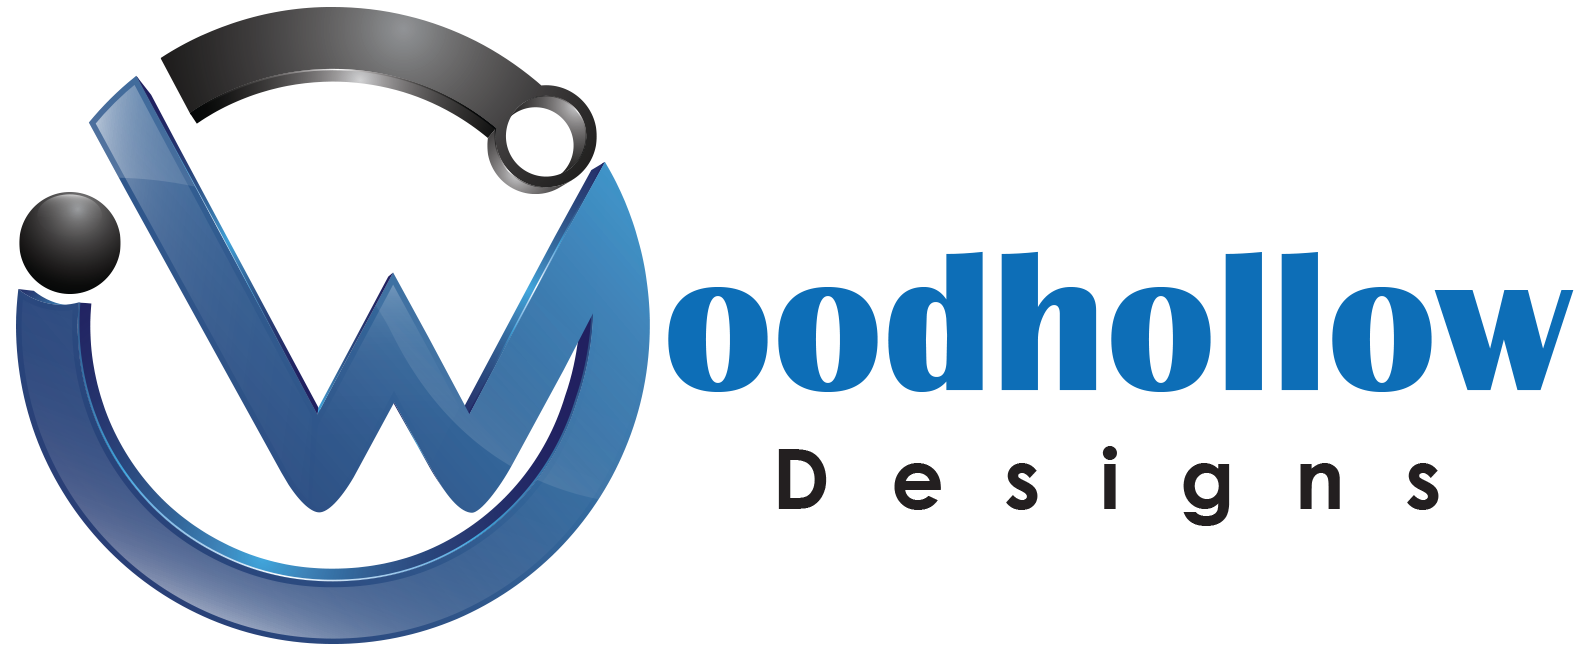 Woodhollow Designs